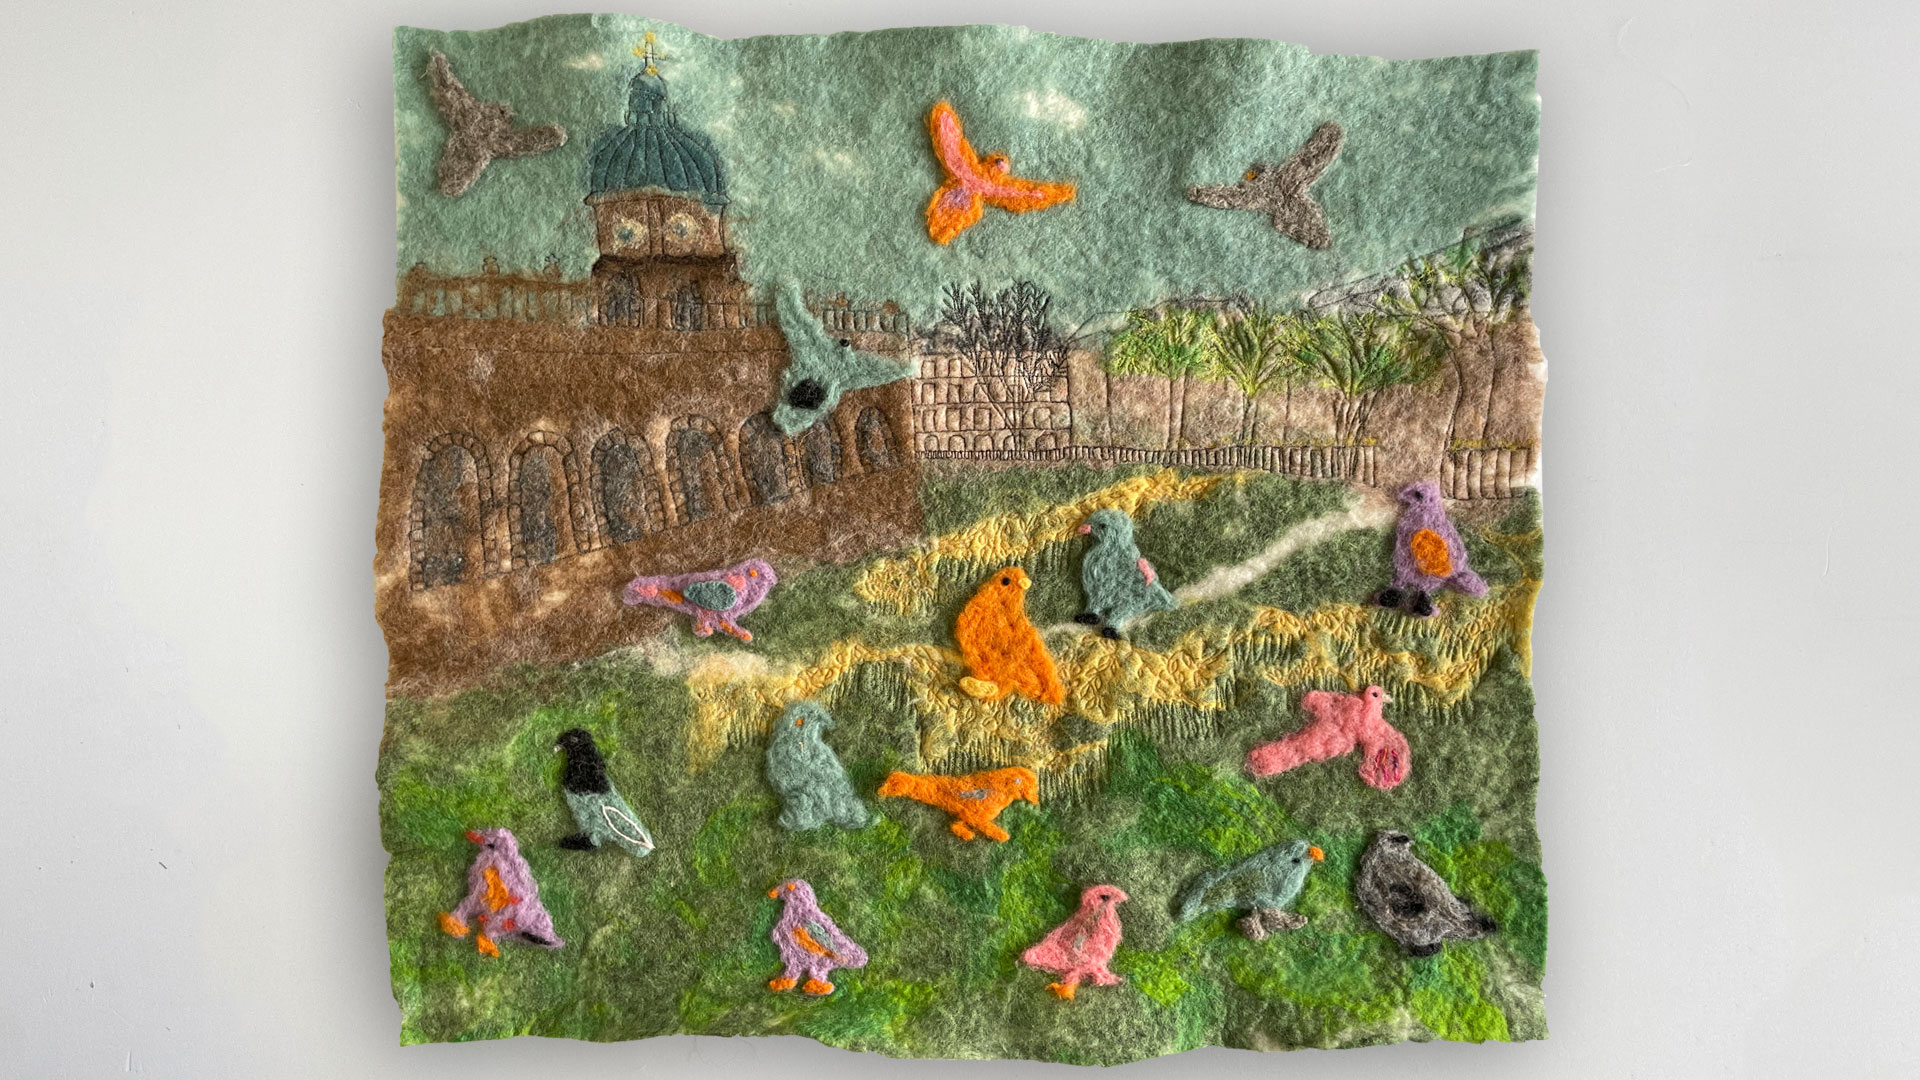 A large colourful square felt scene with many felt birds